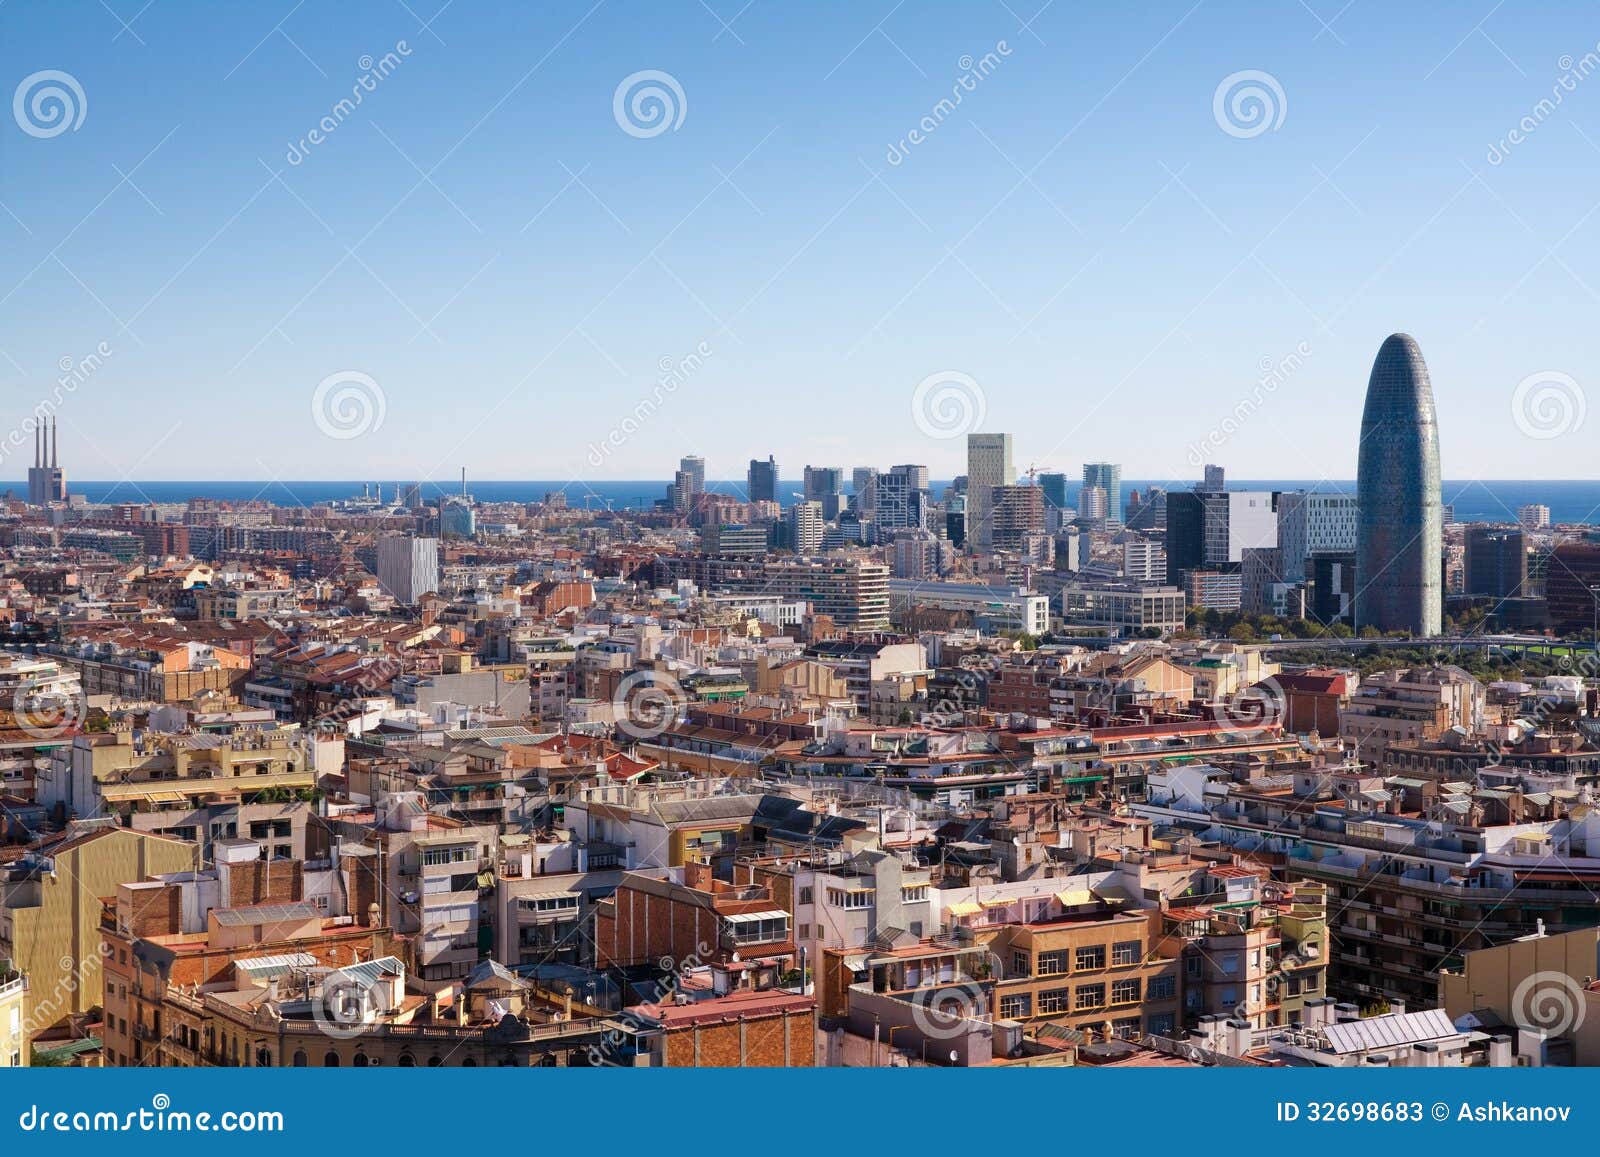 Barcelona Landscape Stock Photos - Image: 32698683